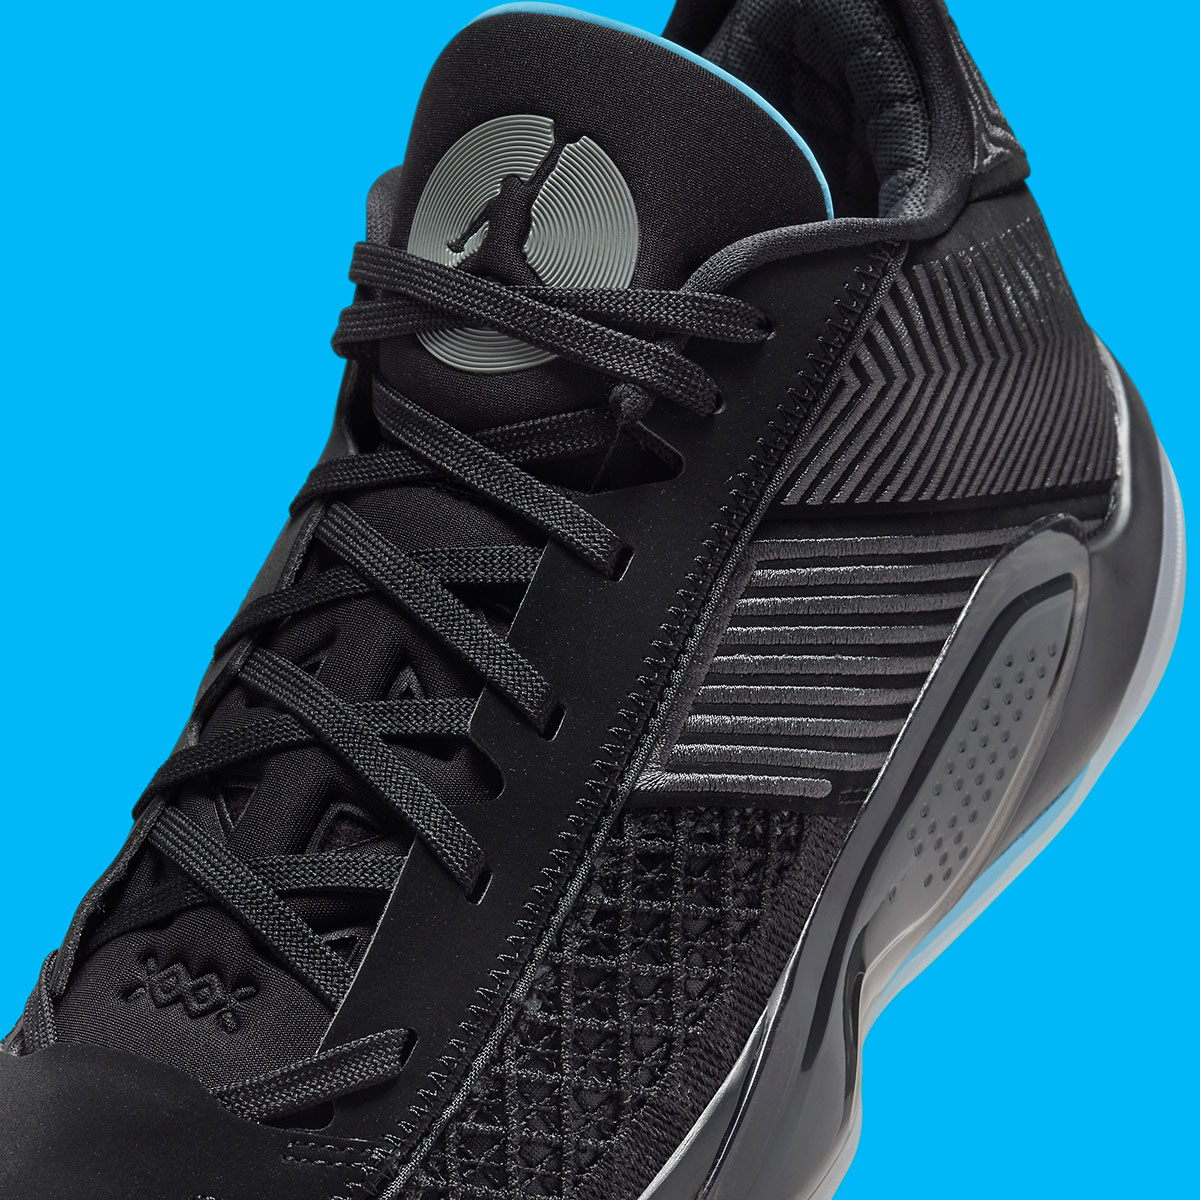 Atmos x The Air Jordan Puppy 1 Flyease Reaches For New Beginnings x Nike Low Black University Blue Fd2326 004 4